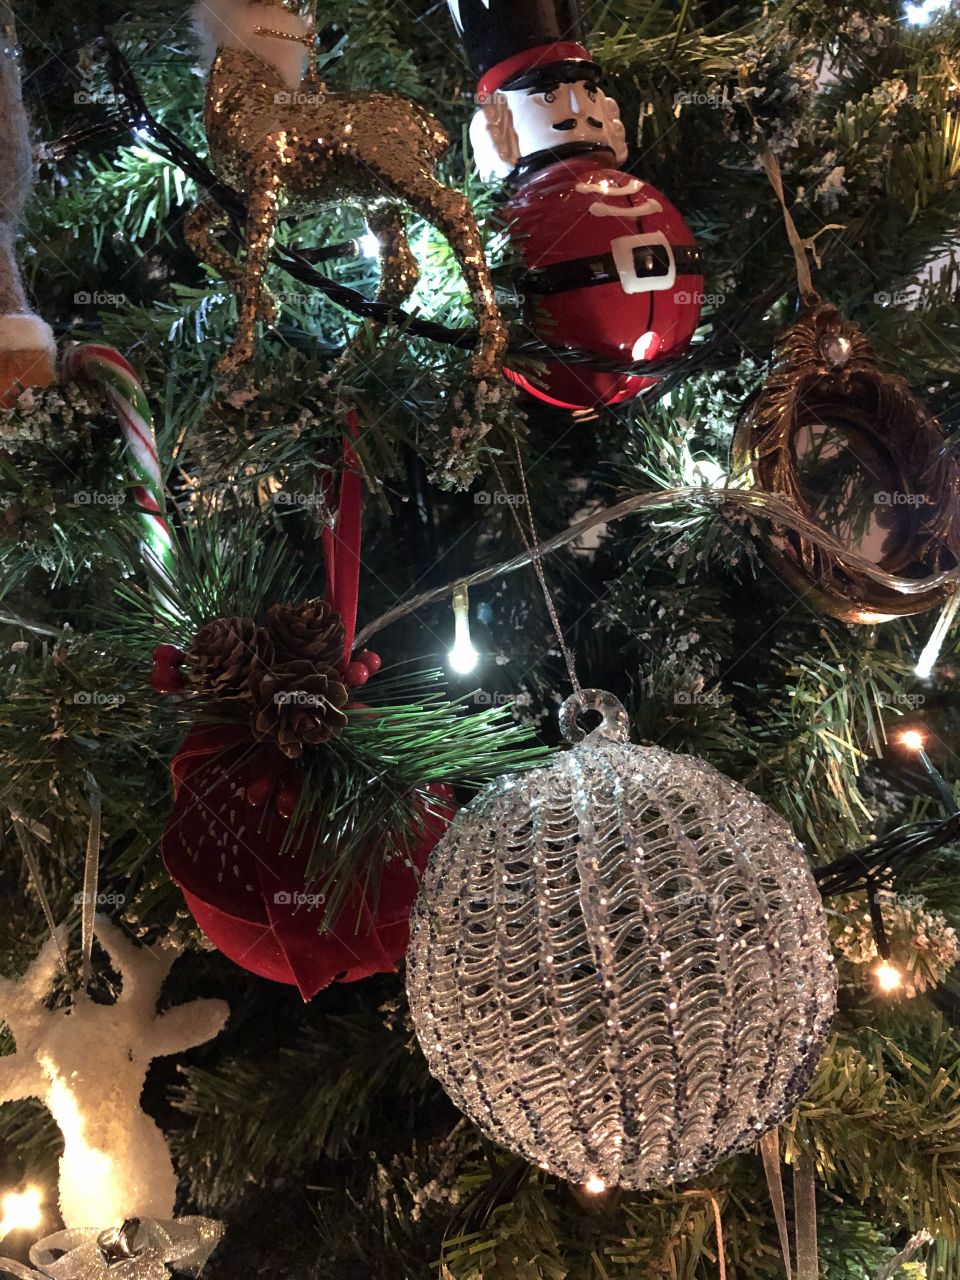 Christmas tree decorations 